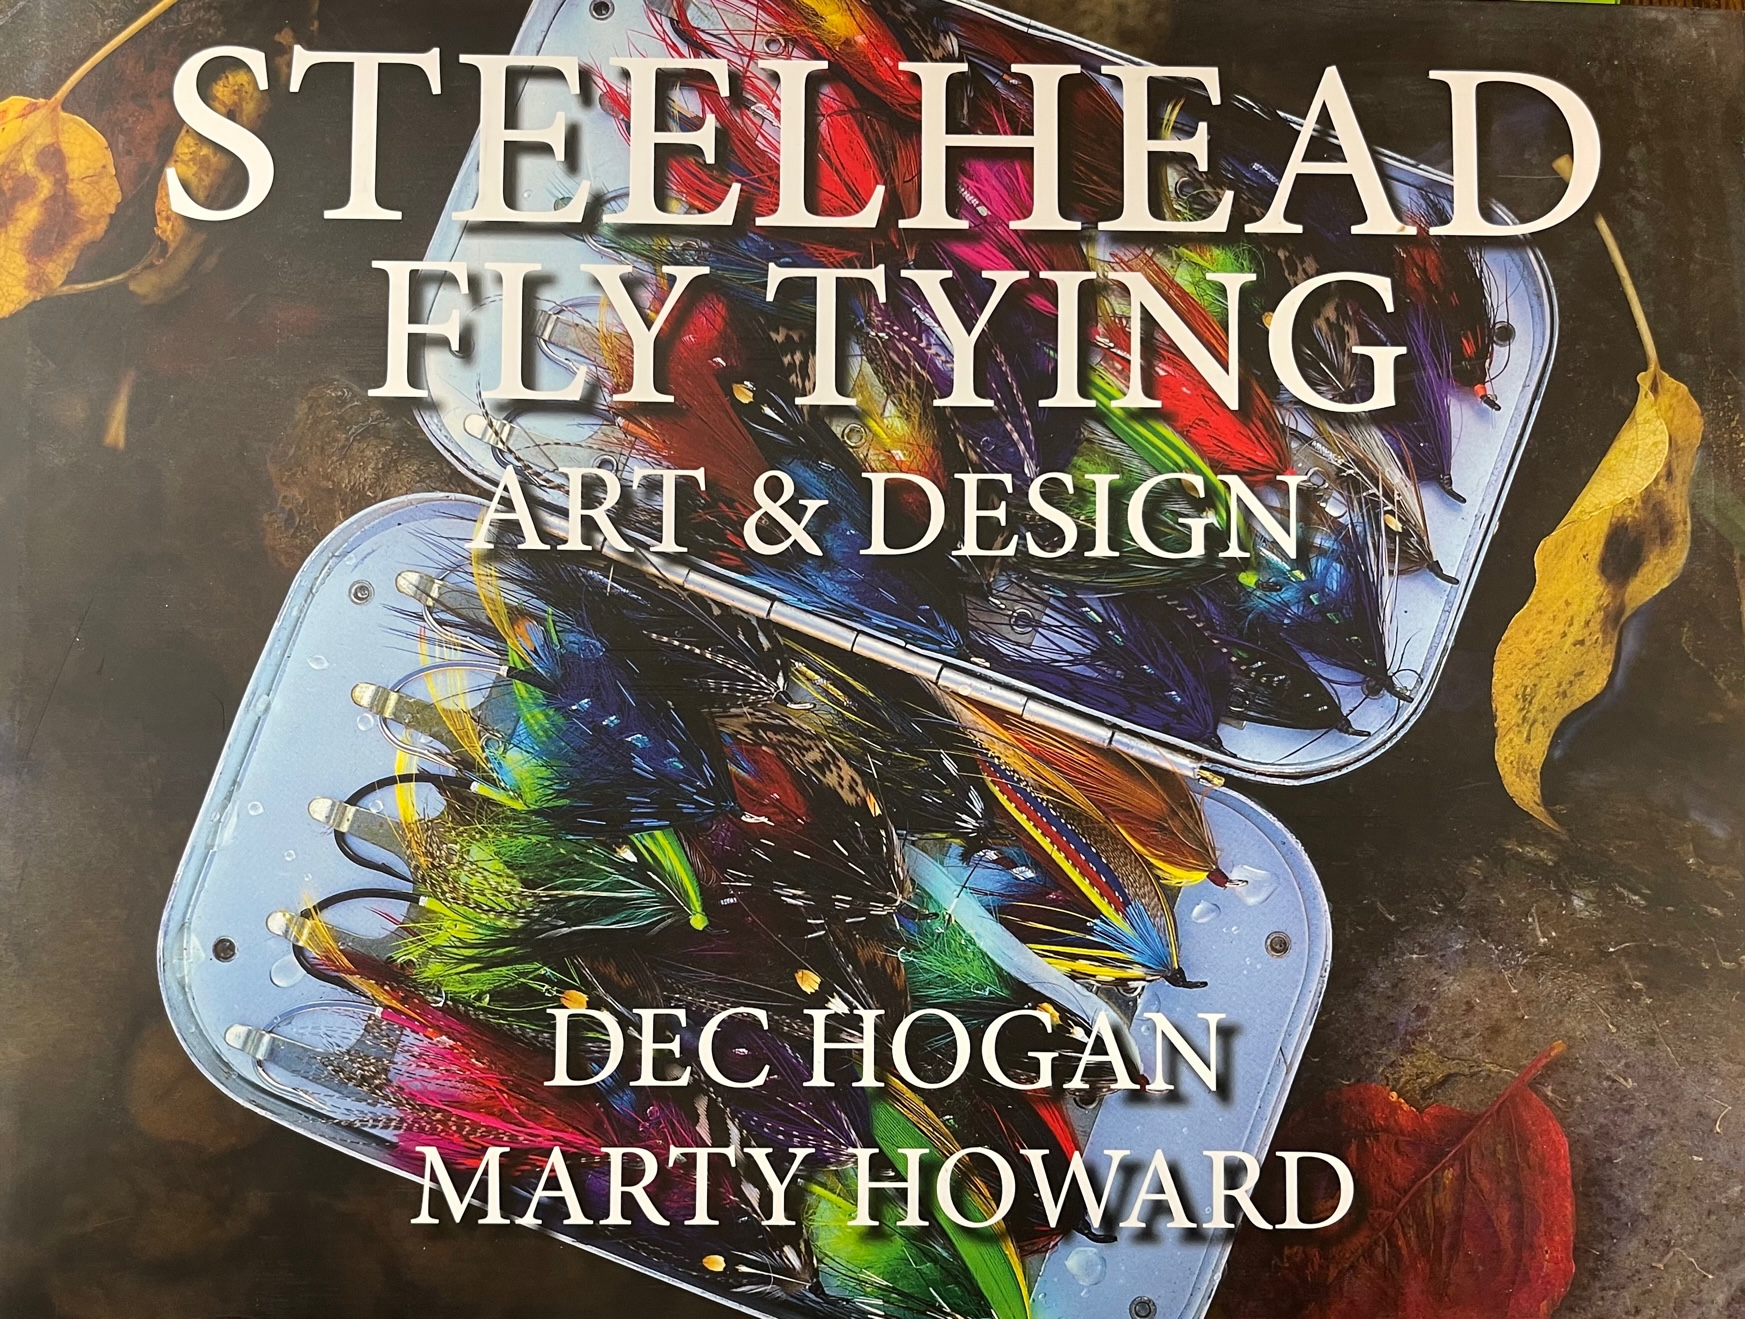 Misc Steelhead Fly Tying Art & Design